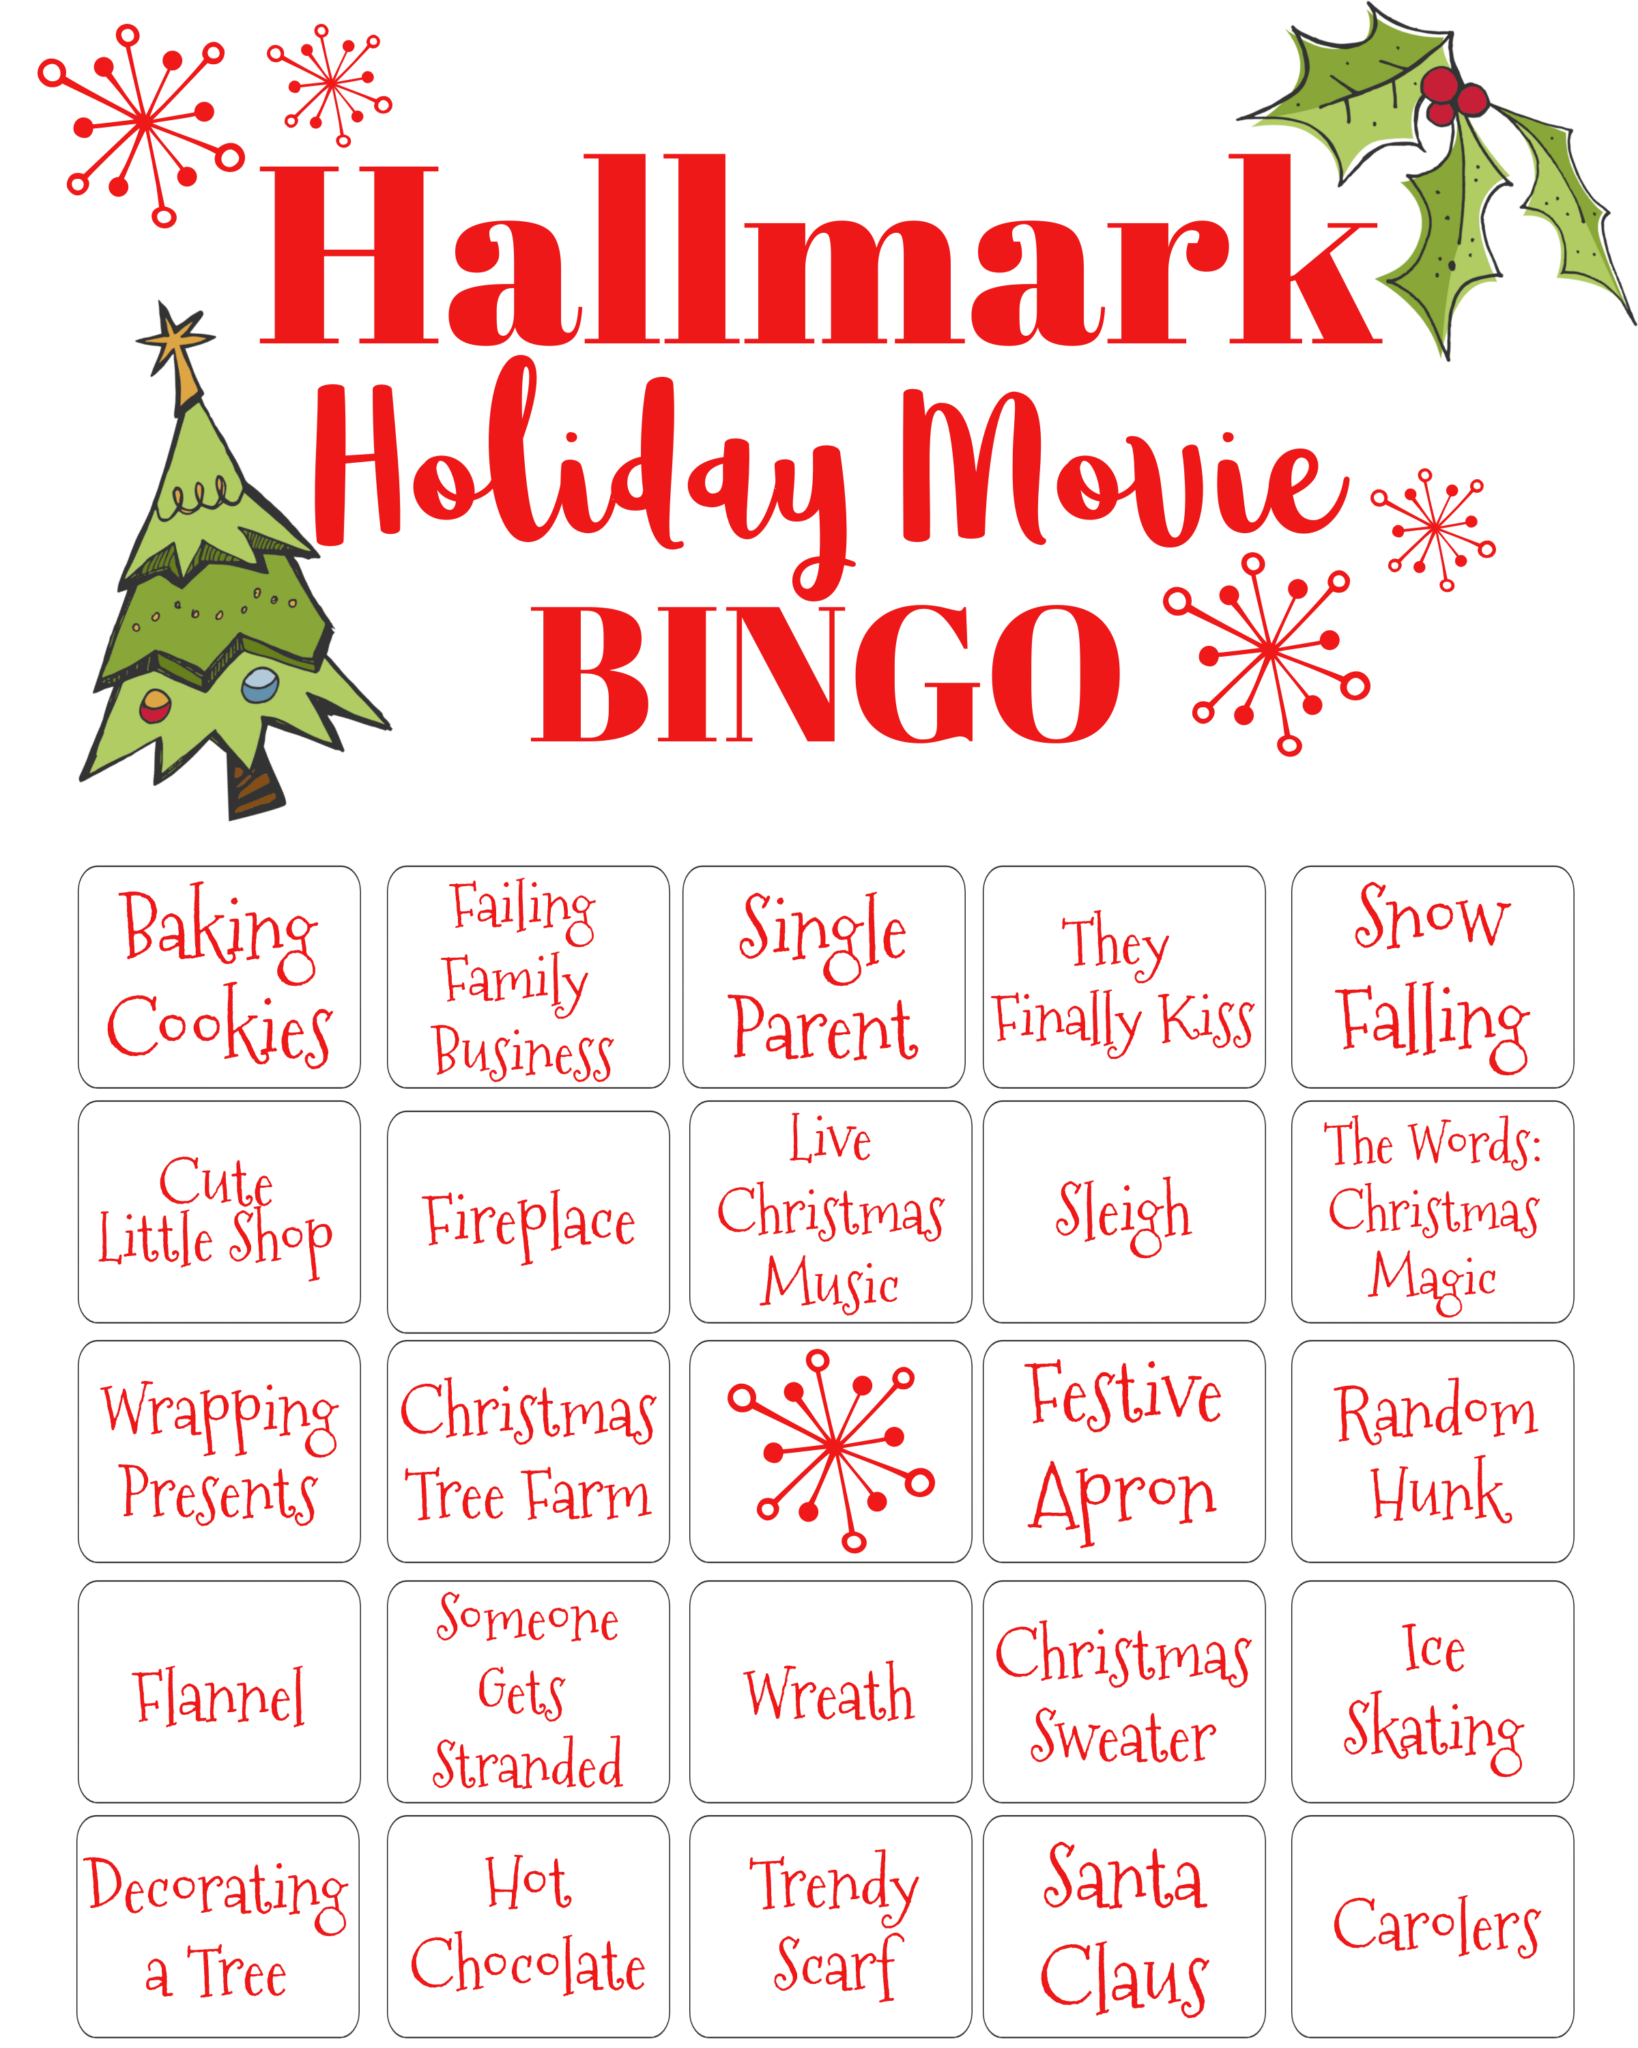 Hallmark Holiday Movie Bingo Printable Card For Extra Fun 